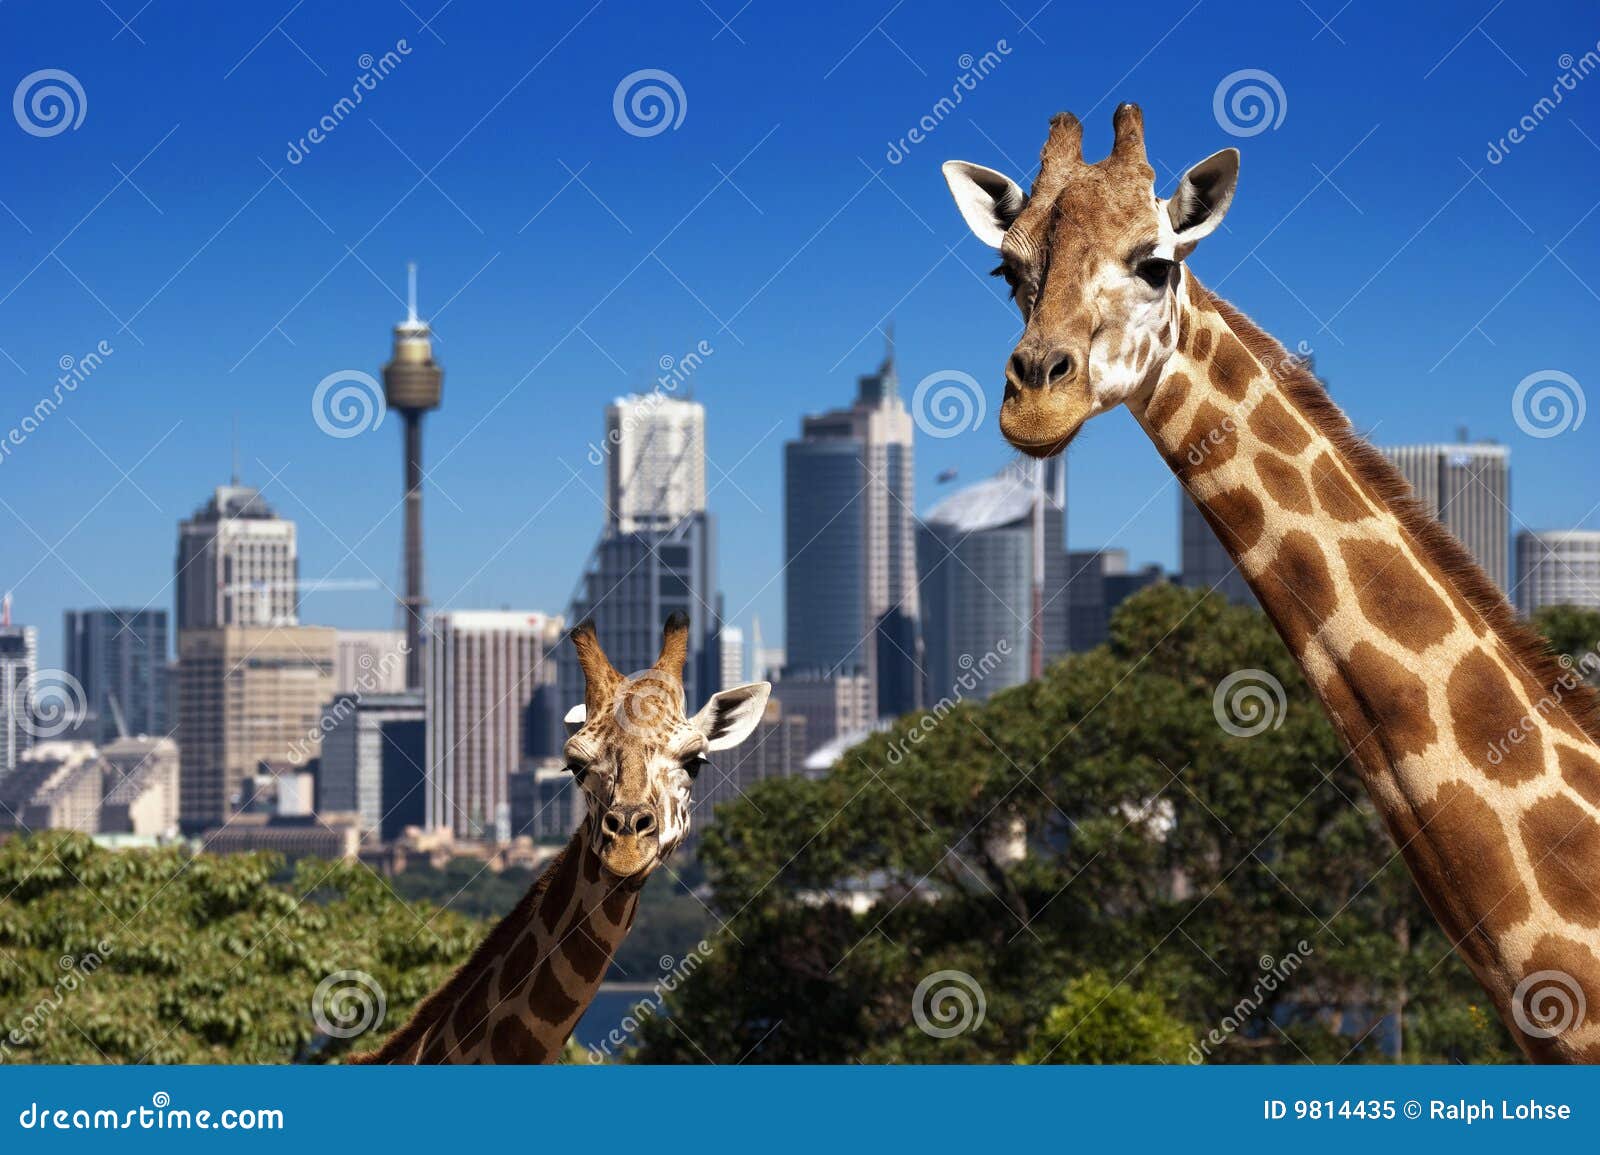 giraffe sydney zoo